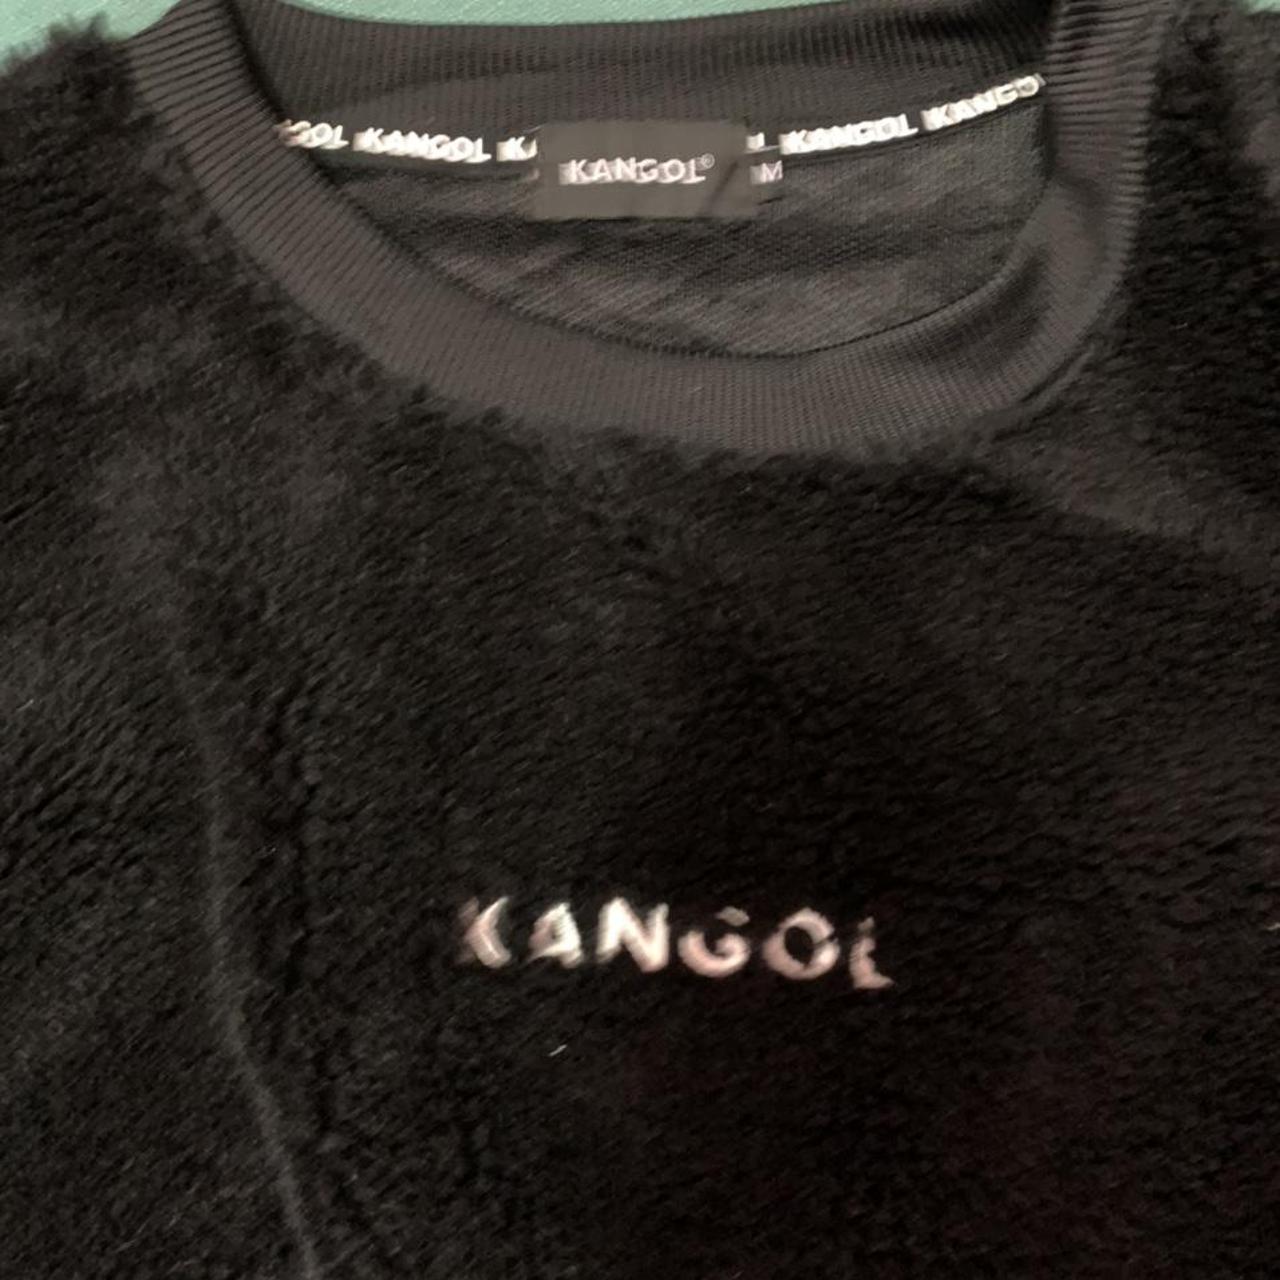 Sweatshirt Fleece KANGOL Big Logo size On tag... - Depop